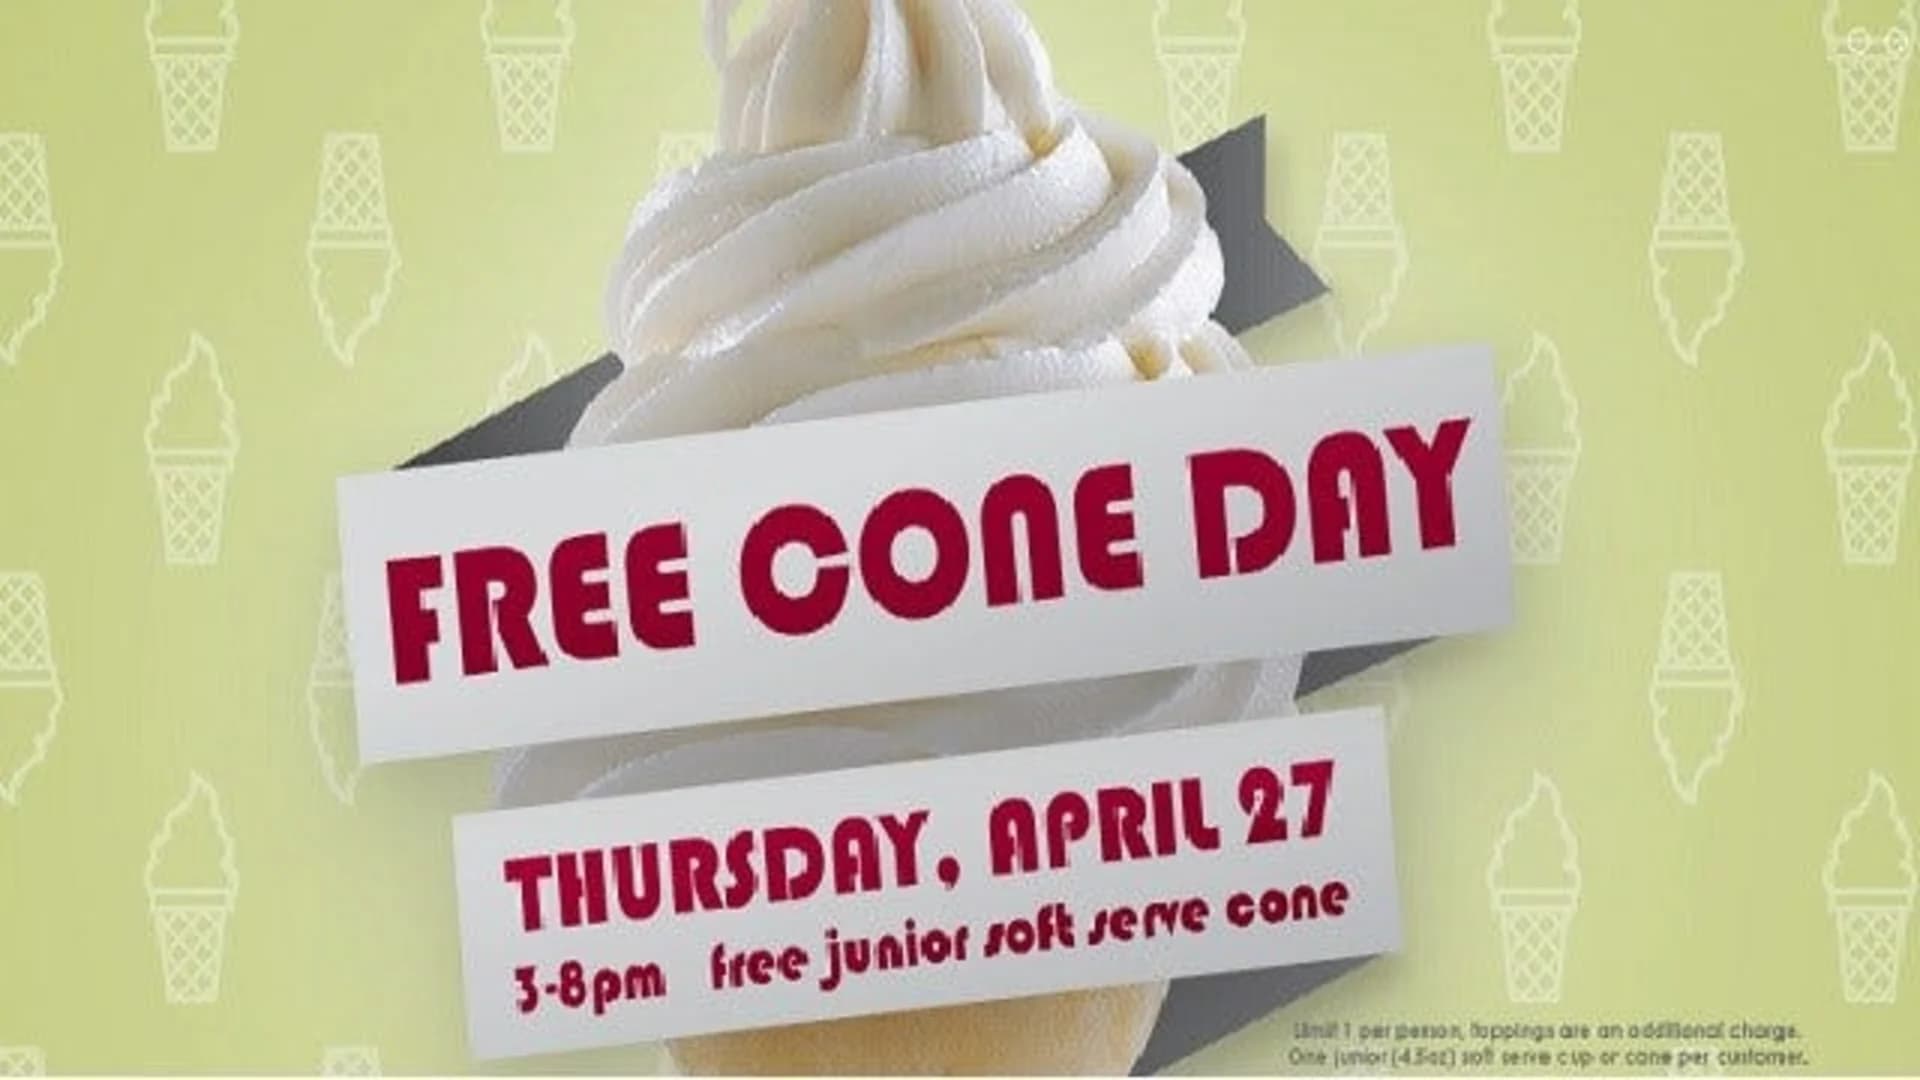 Carvel kicks off ice cream season with Free Cone Day